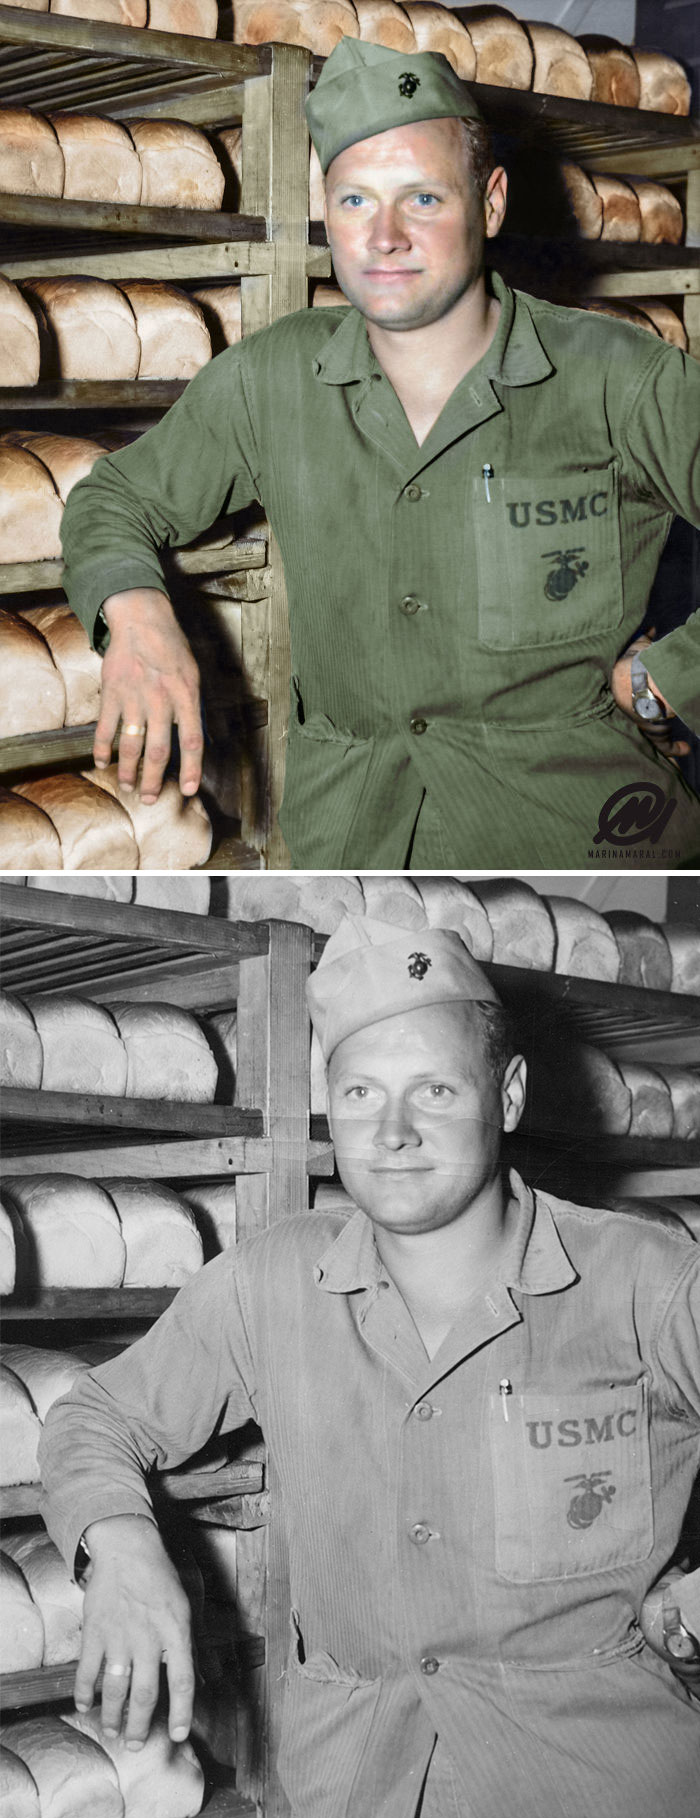 Donald W. Stulp, A Baker For The Omar Bakery In Omaha